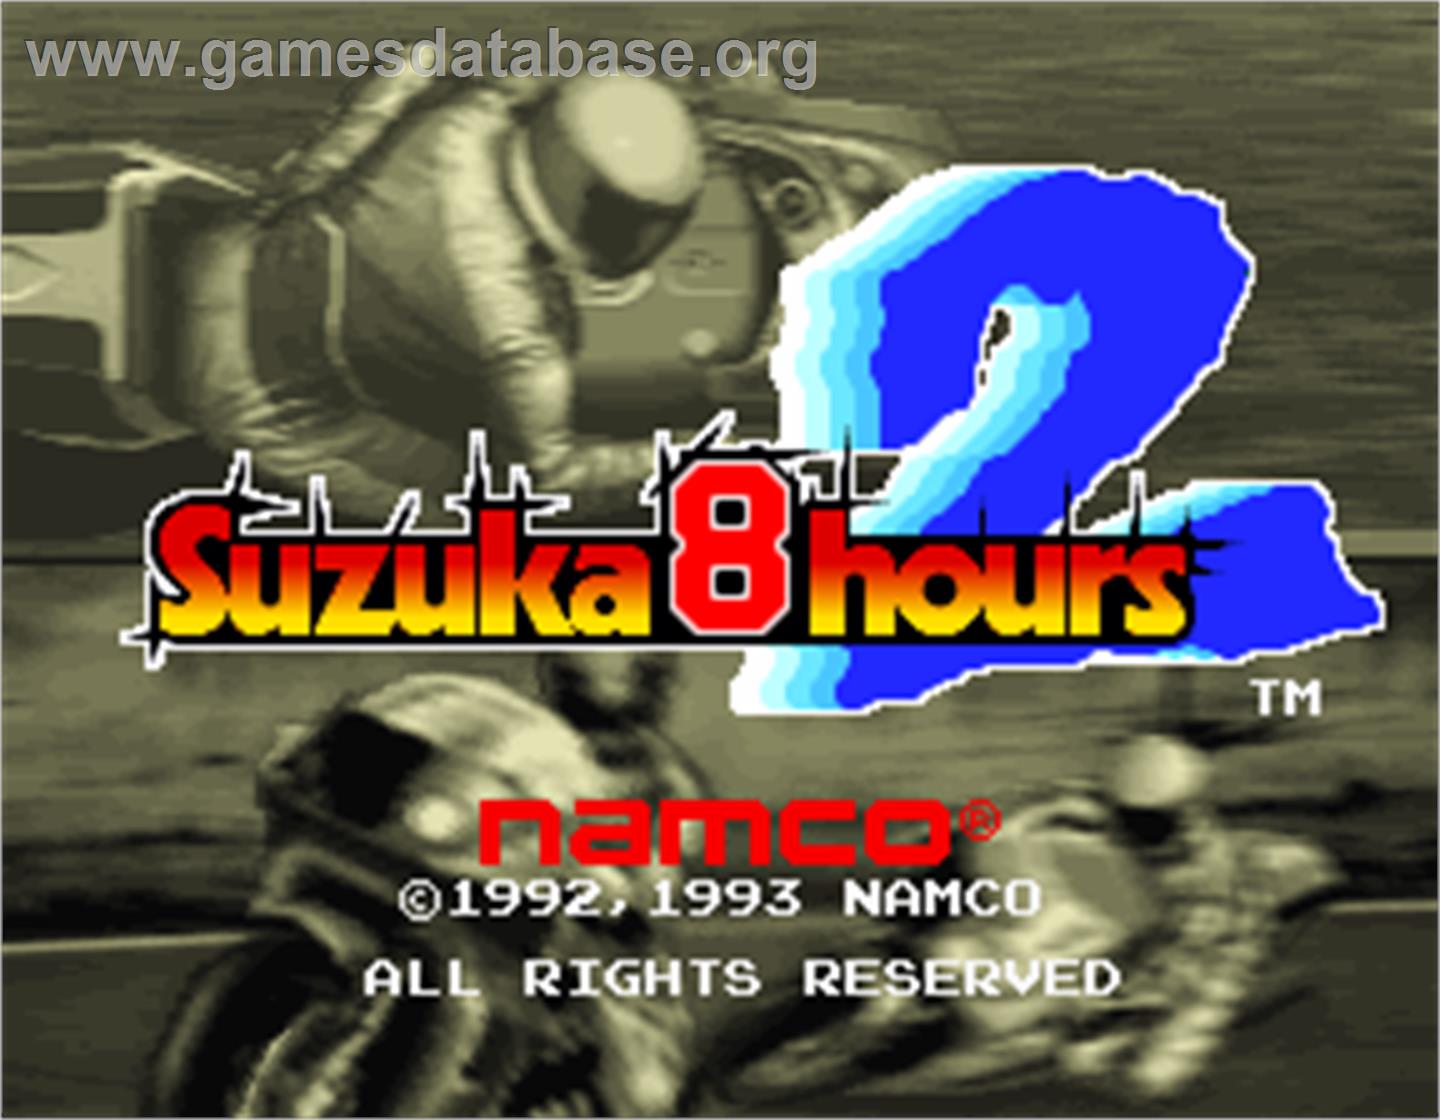 Suzuka 8 Hours 2 - Arcade - Artwork - Title Screen